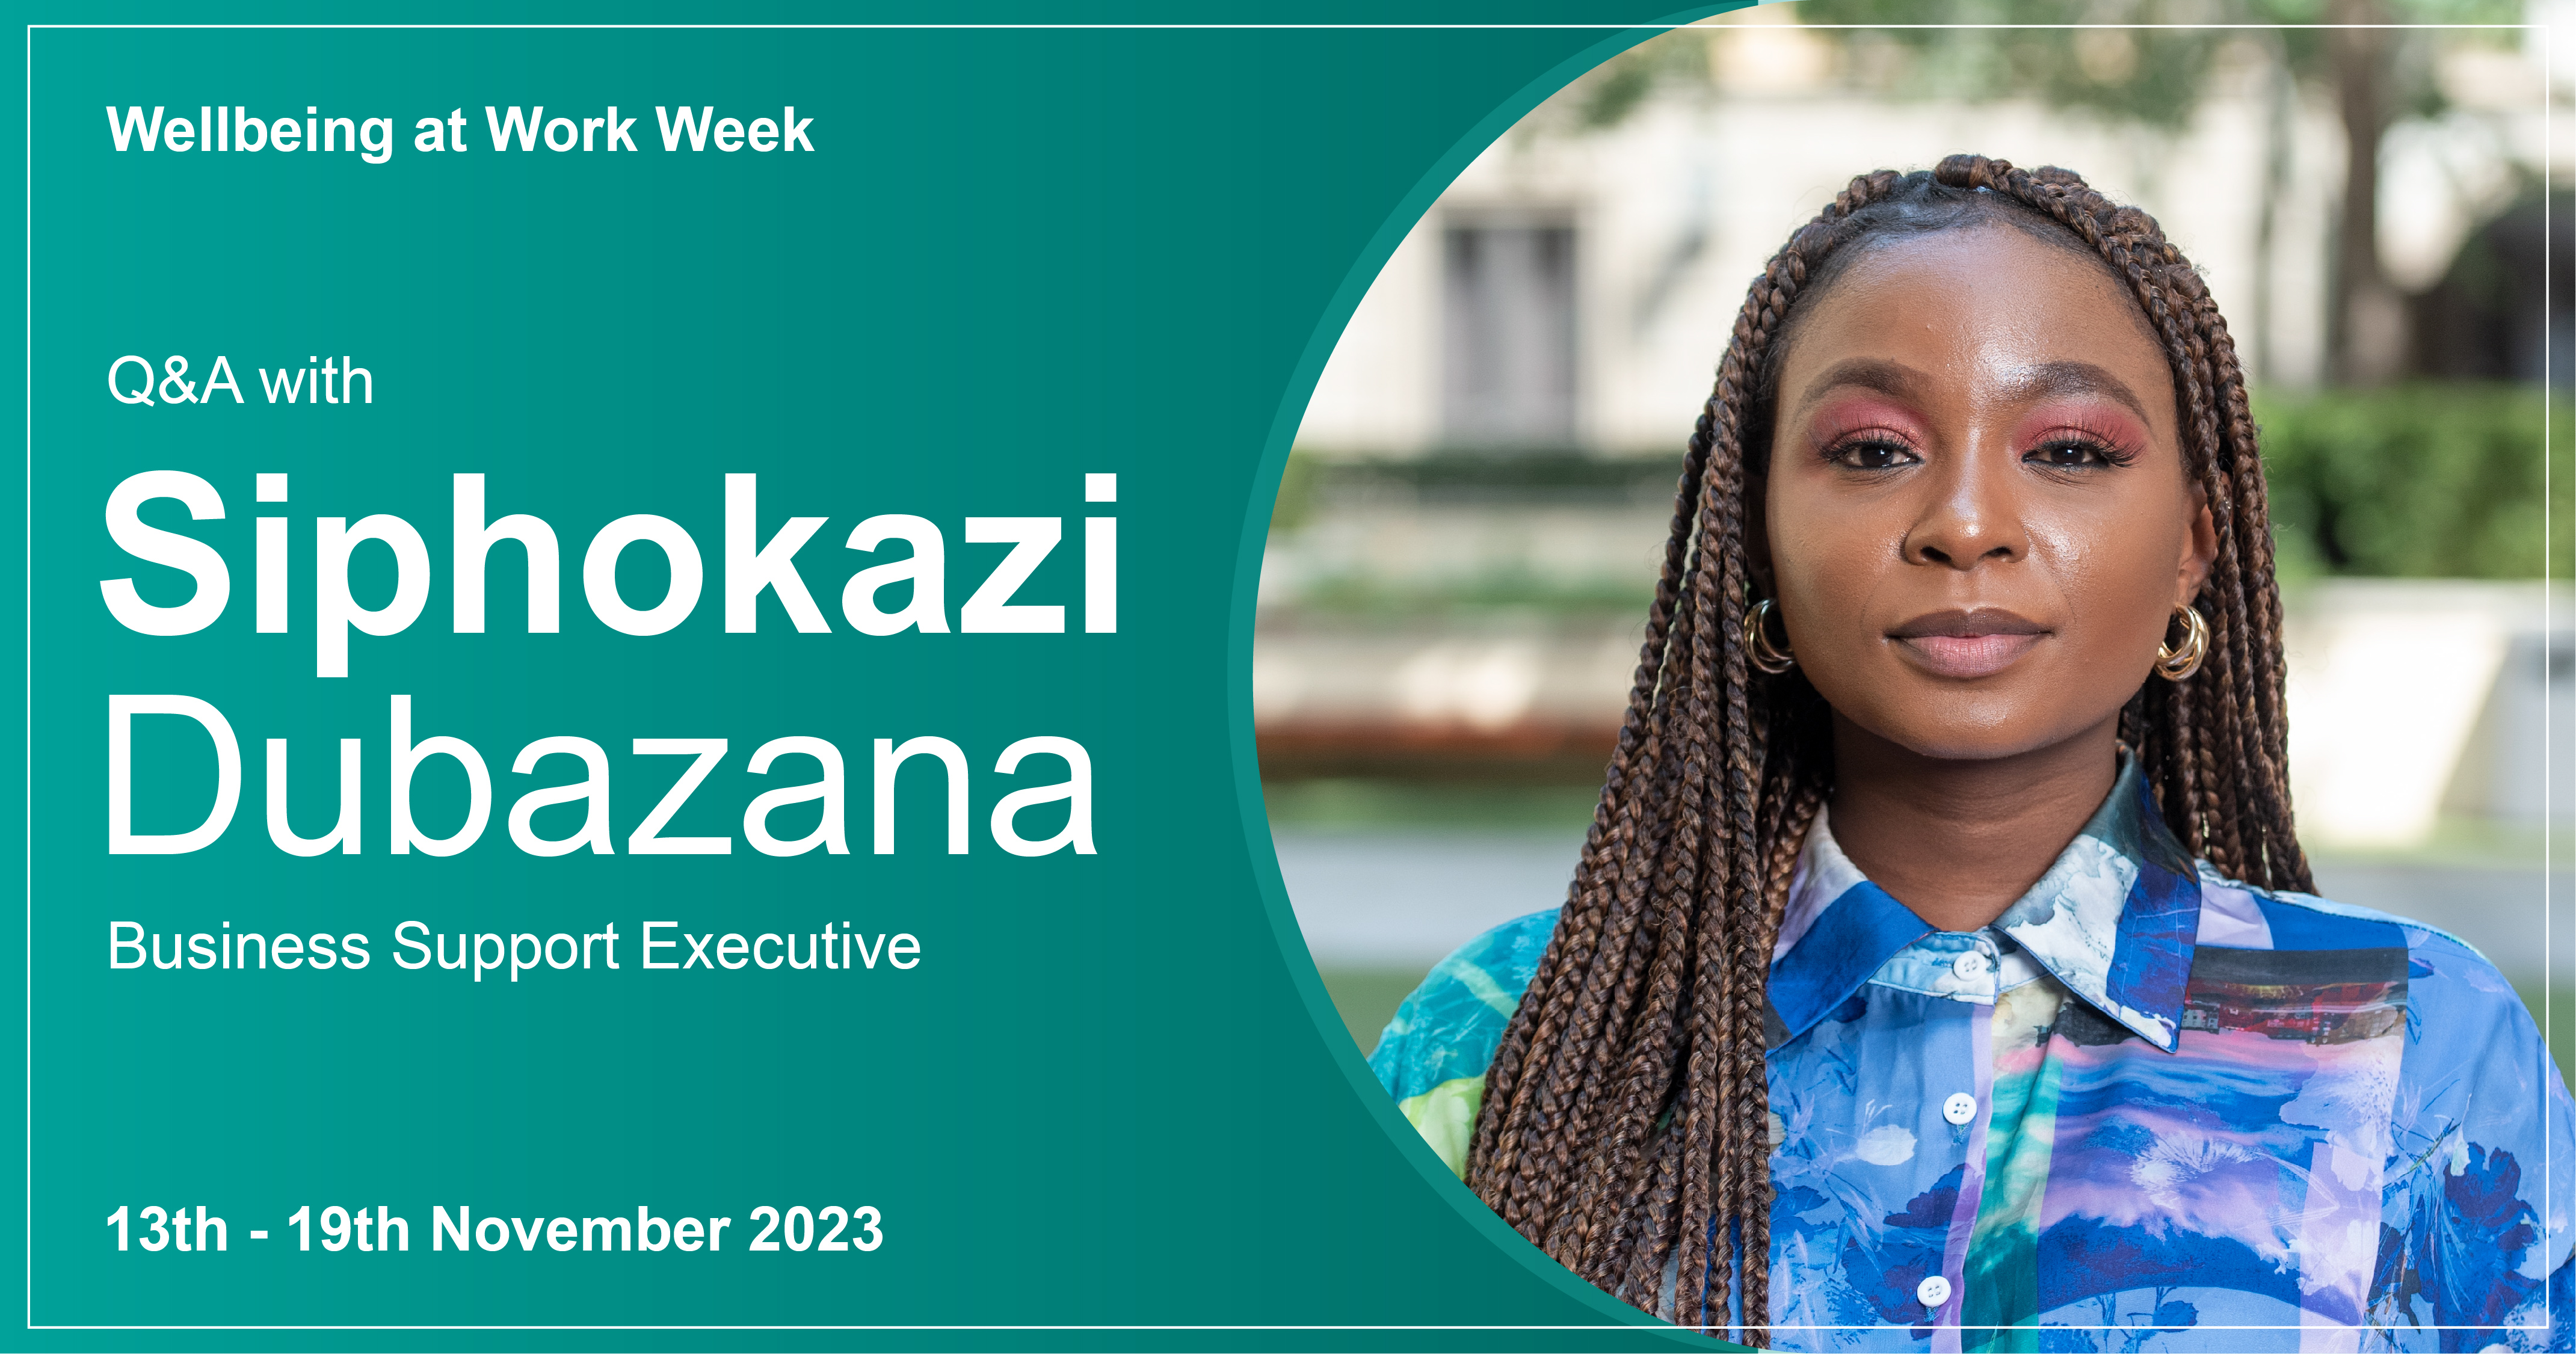 Wellbeing at Work Week 2023: Siphokazi Dubazana, Business Support Executive